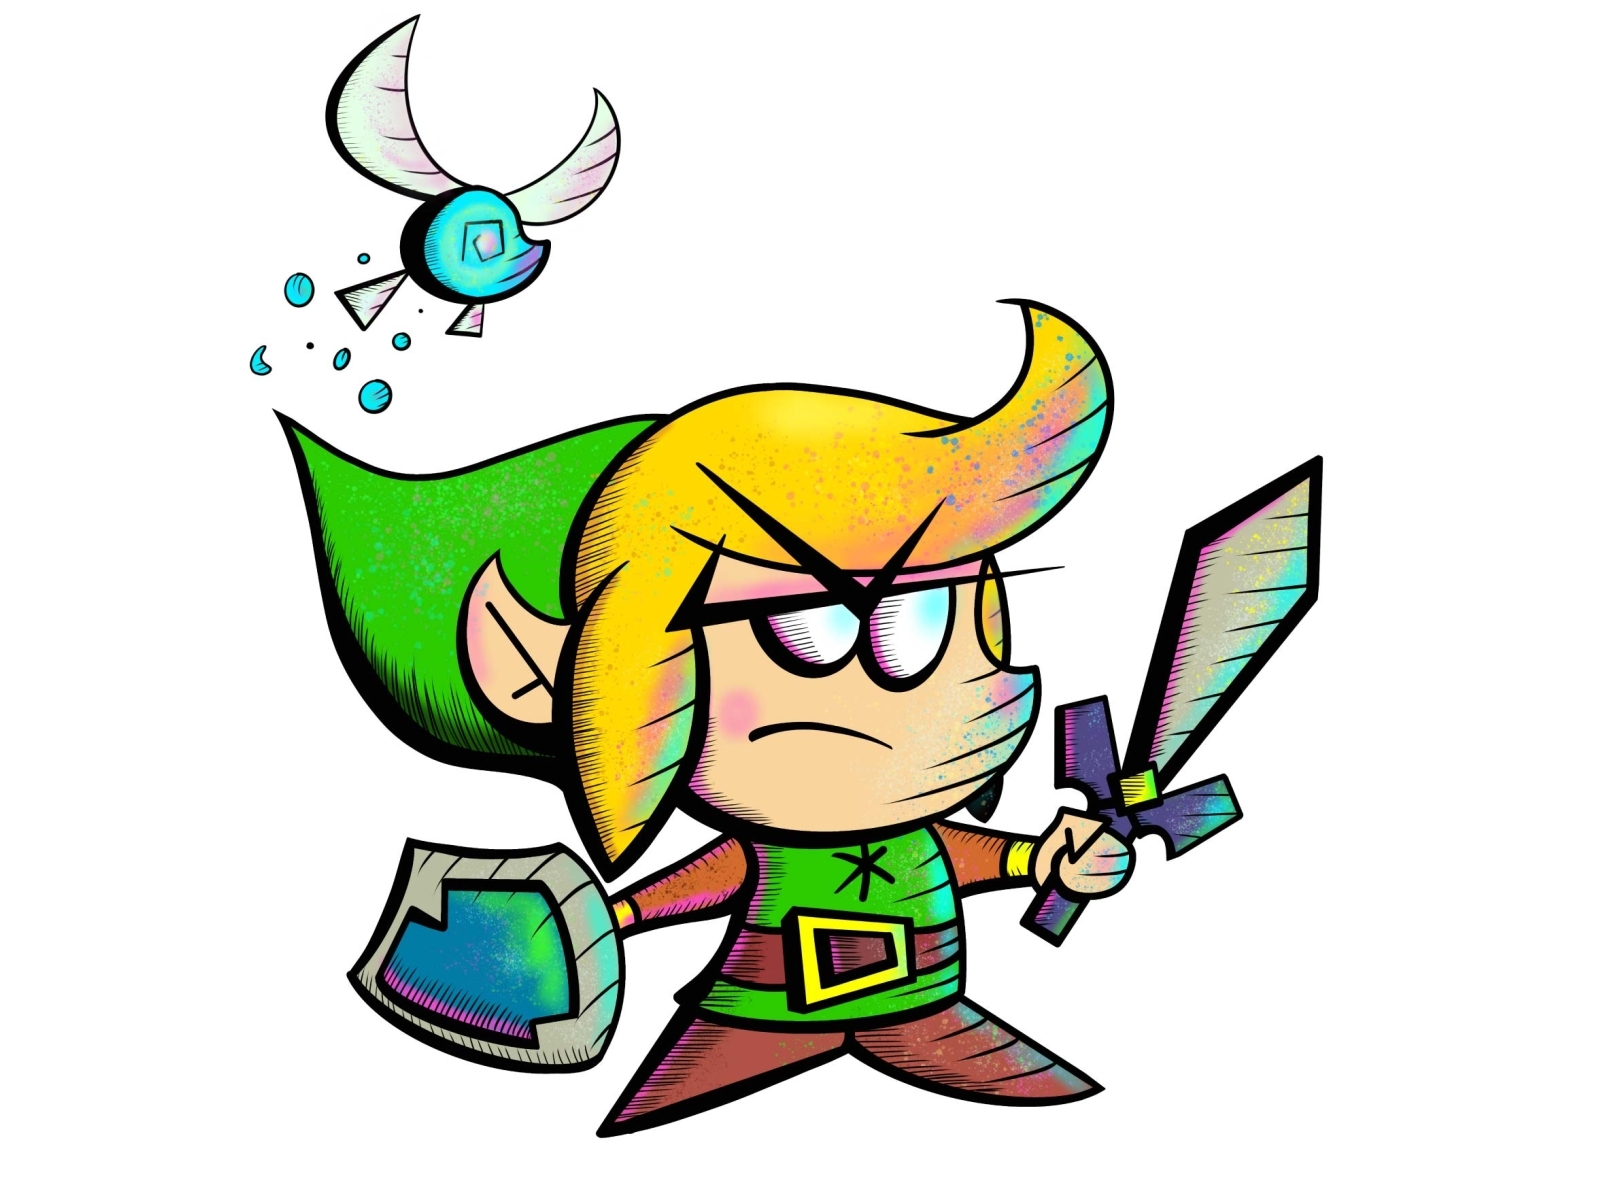 Angry Chibs Link (The Legend of Zelda) by Ivan Ramirez on Dribbble